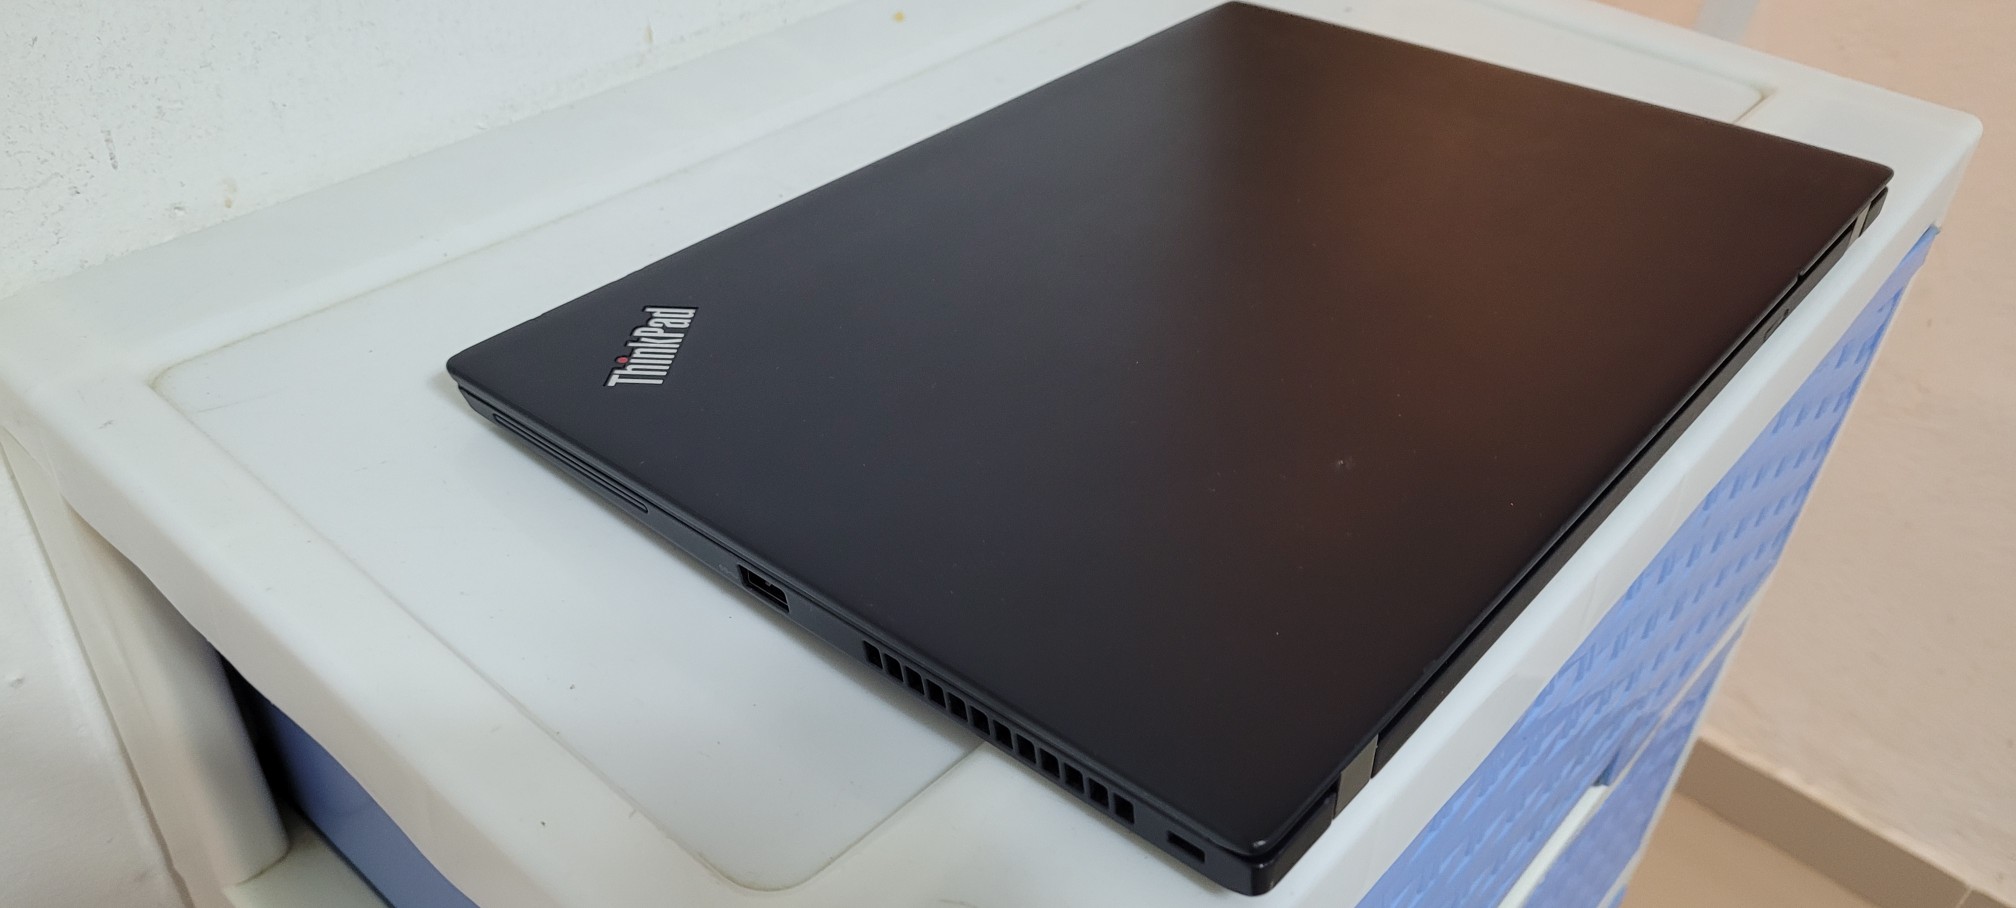 computadoras y laptops - Lenovo T460s 14 Pulg Core i5 6ta Gen Ram 8gb ddr4 Disco 256gb SSD Solido 2